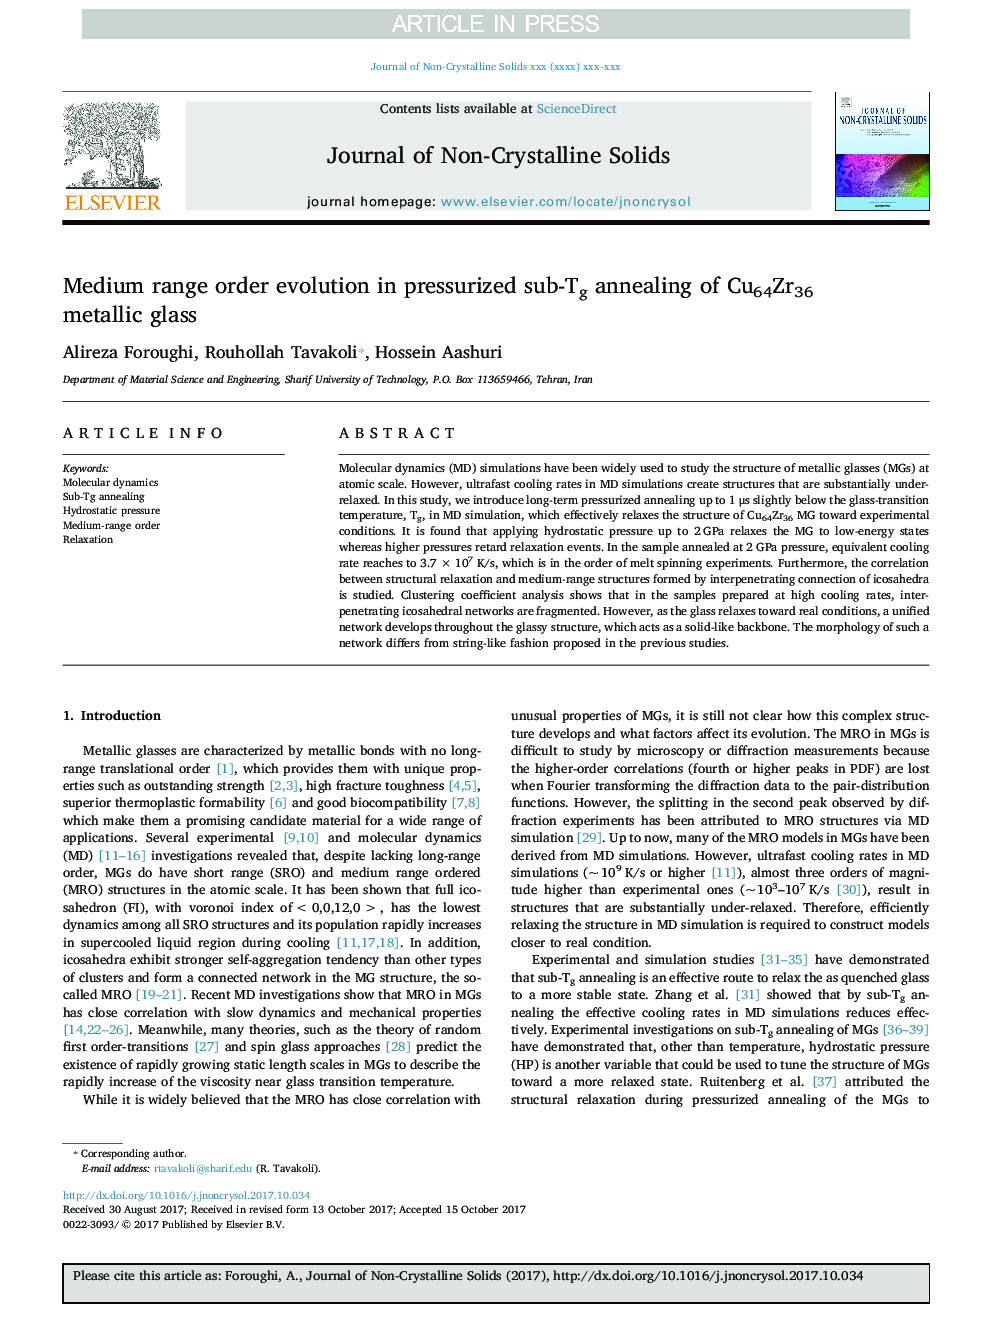 Medium range order evolution in pressurized sub-Tg annealing of Cu64Zr36 metallic glass